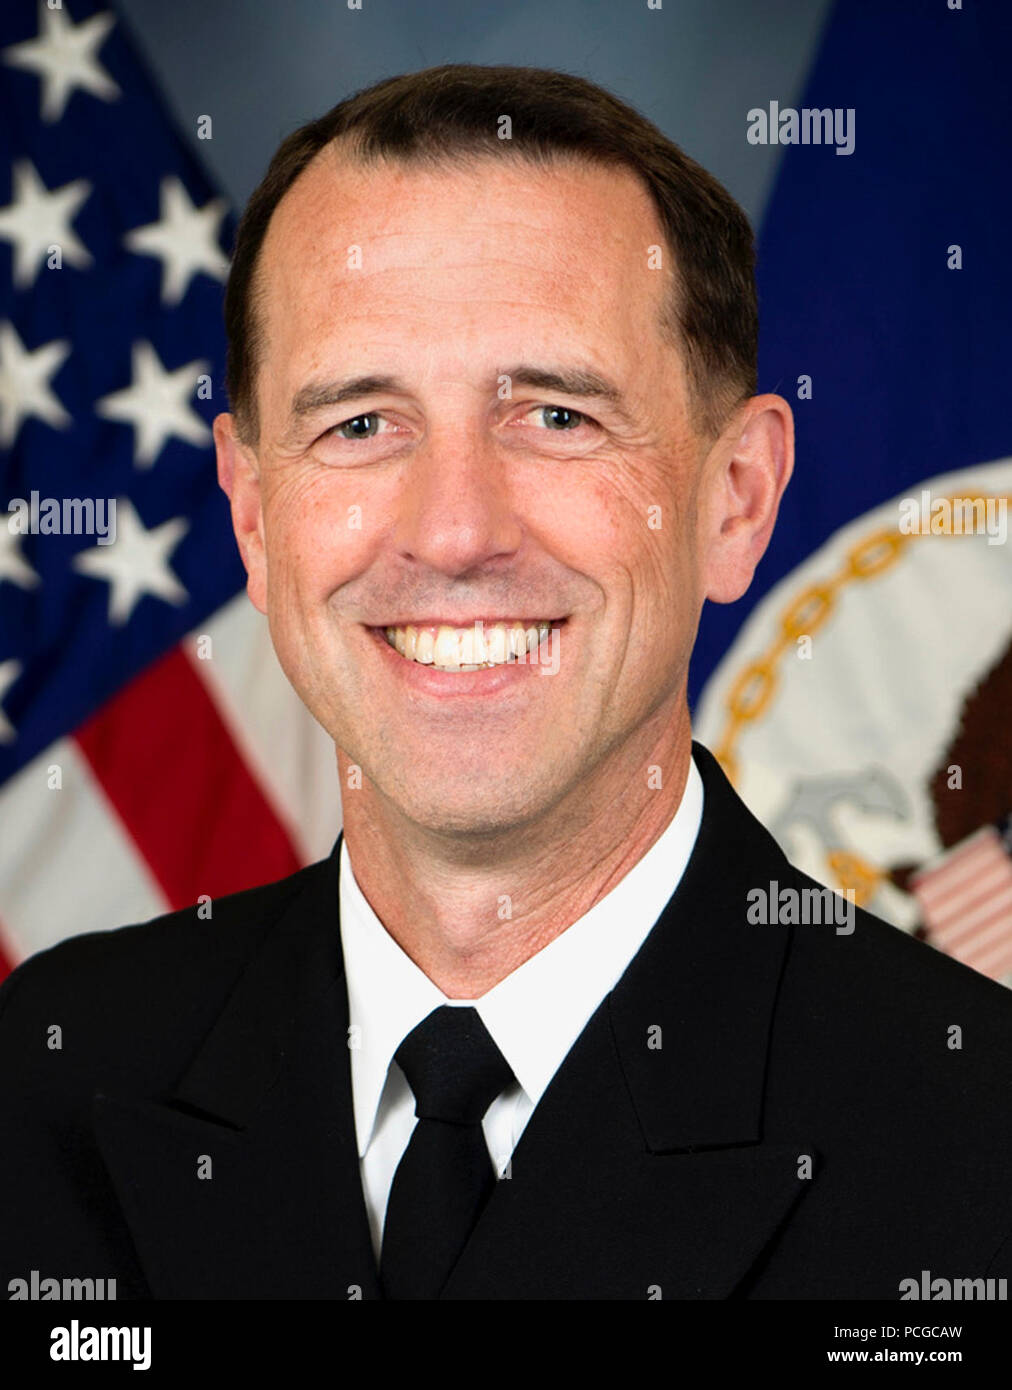 WASHINGTON (Feb. 12, 2012) Chef der Naval Operations (CNO) Adm. John Richardson, der 31 CNO. Stockfoto